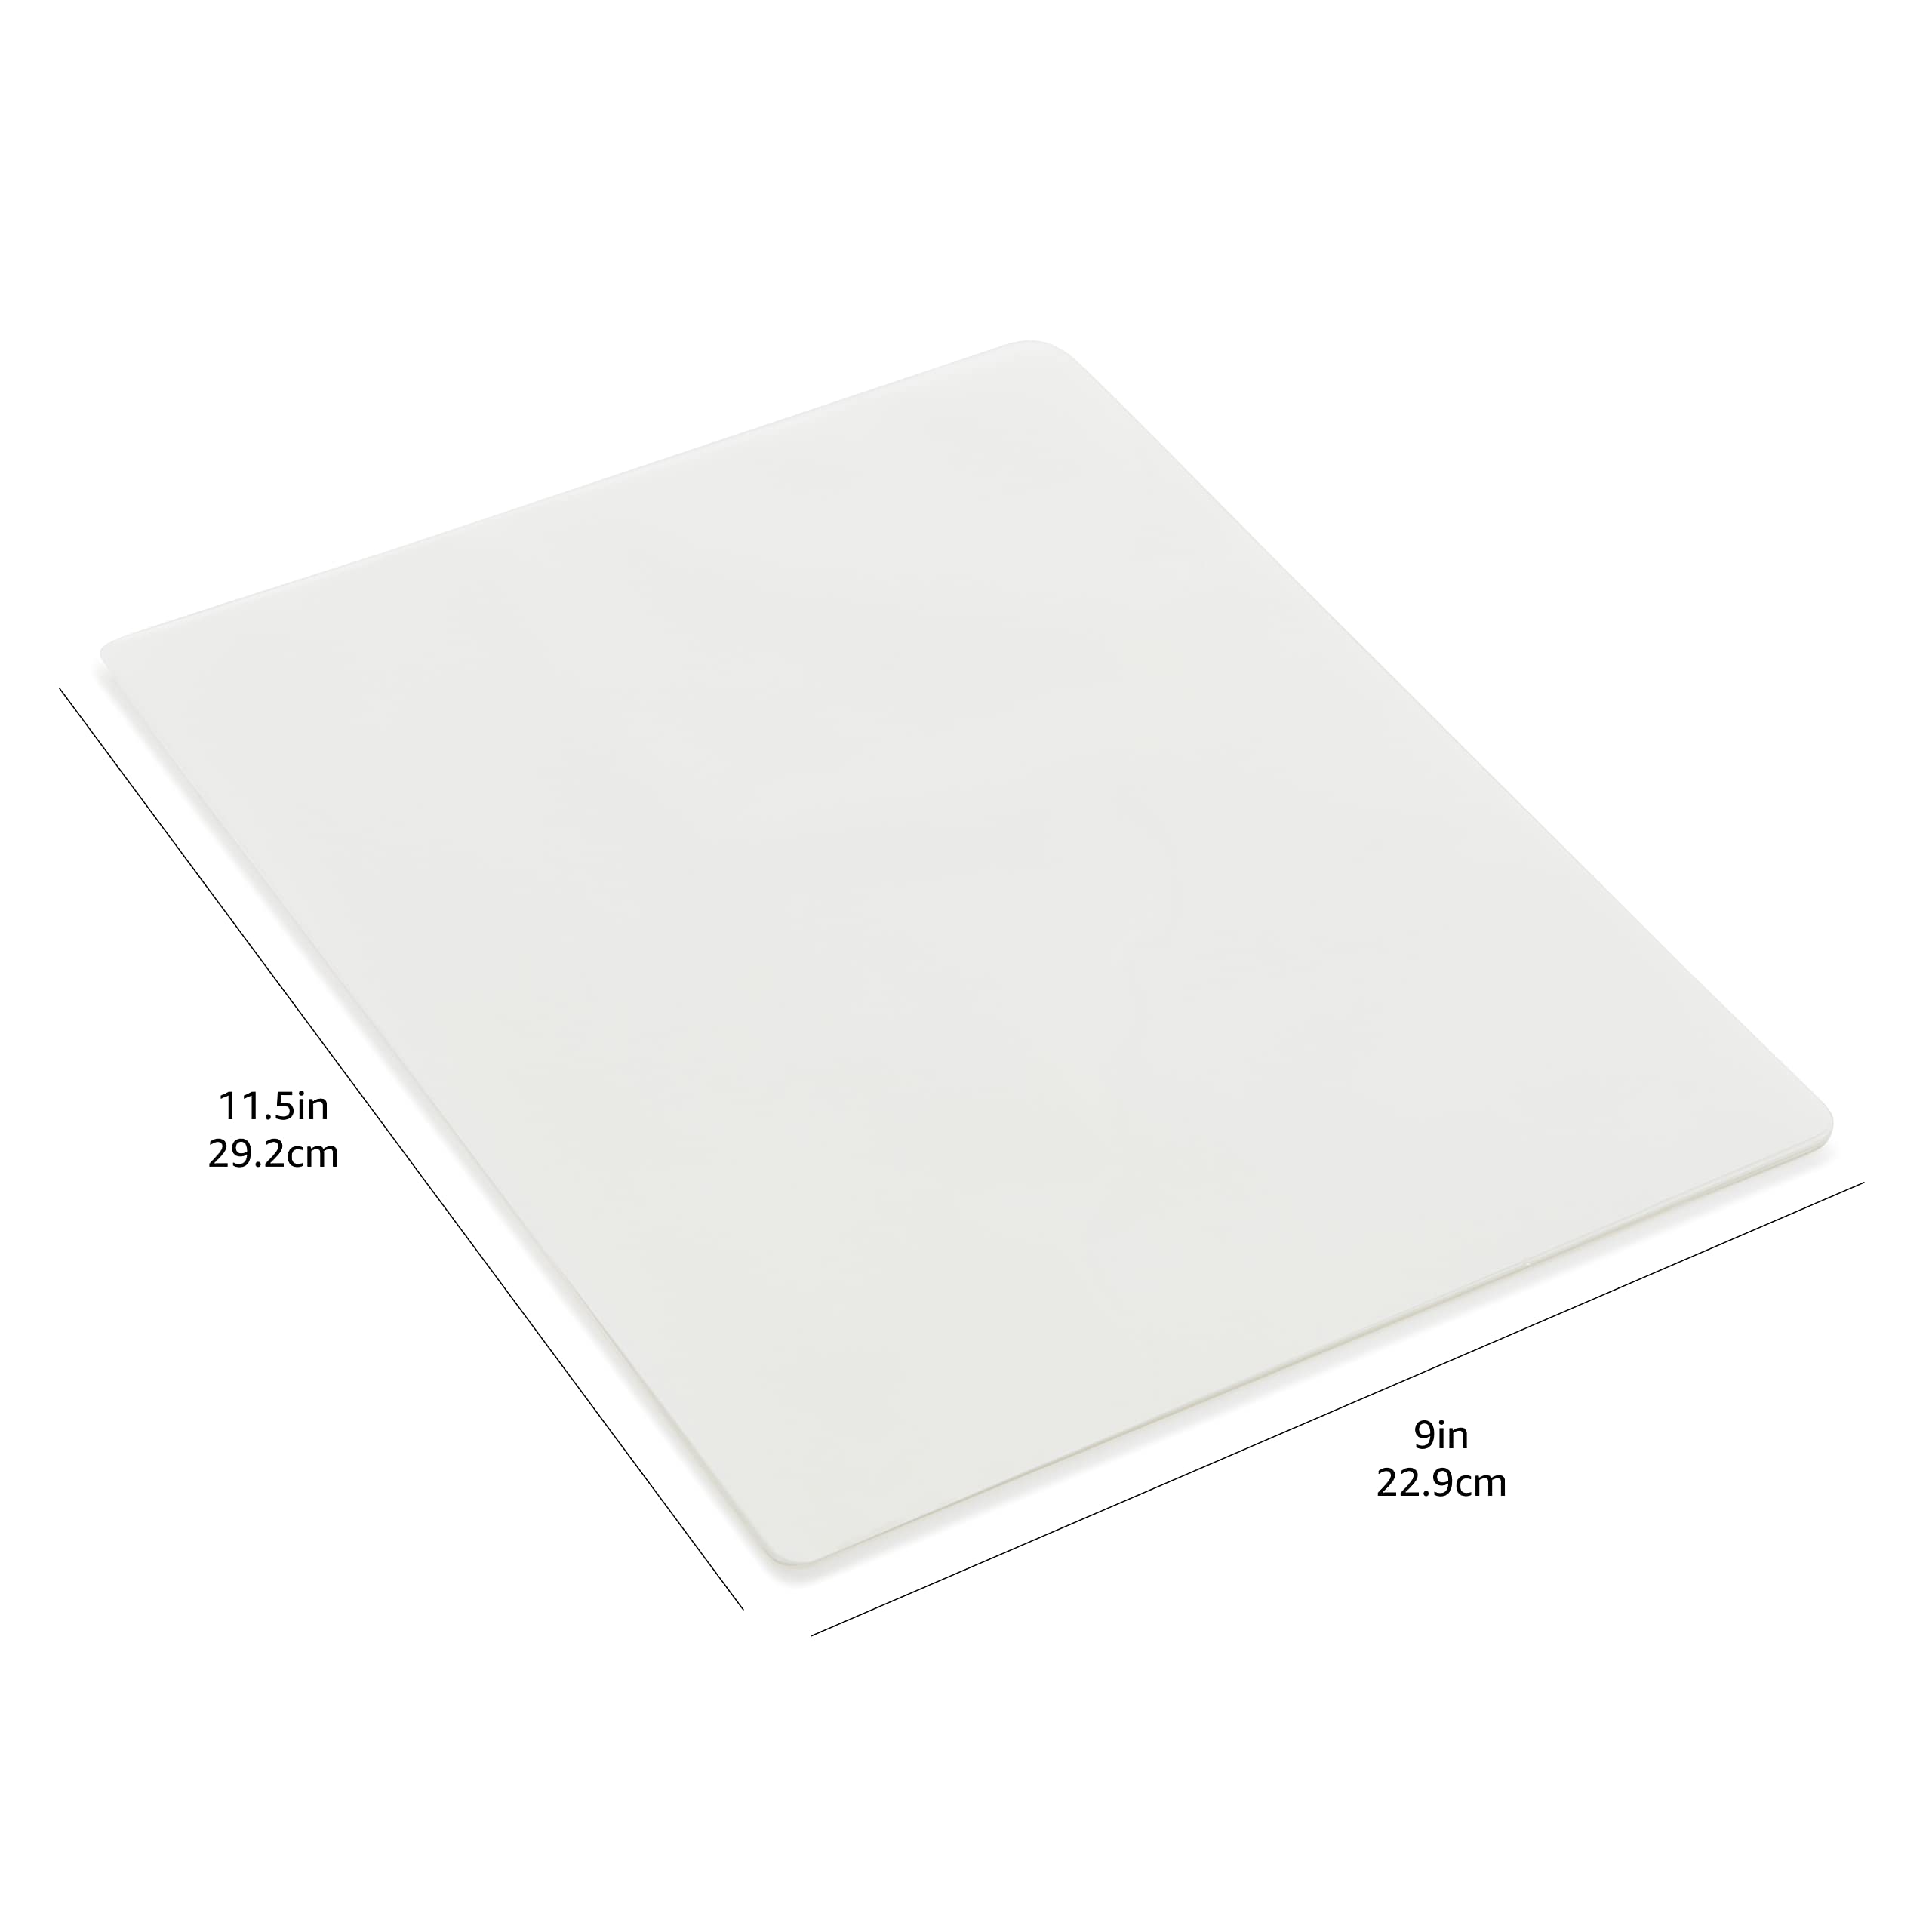 Amazon Basics Clear Thermal Laminating Plastic Paper Laminator Sheets - 11.5 x 9.0-Inch, 100-Pack, 3 mil